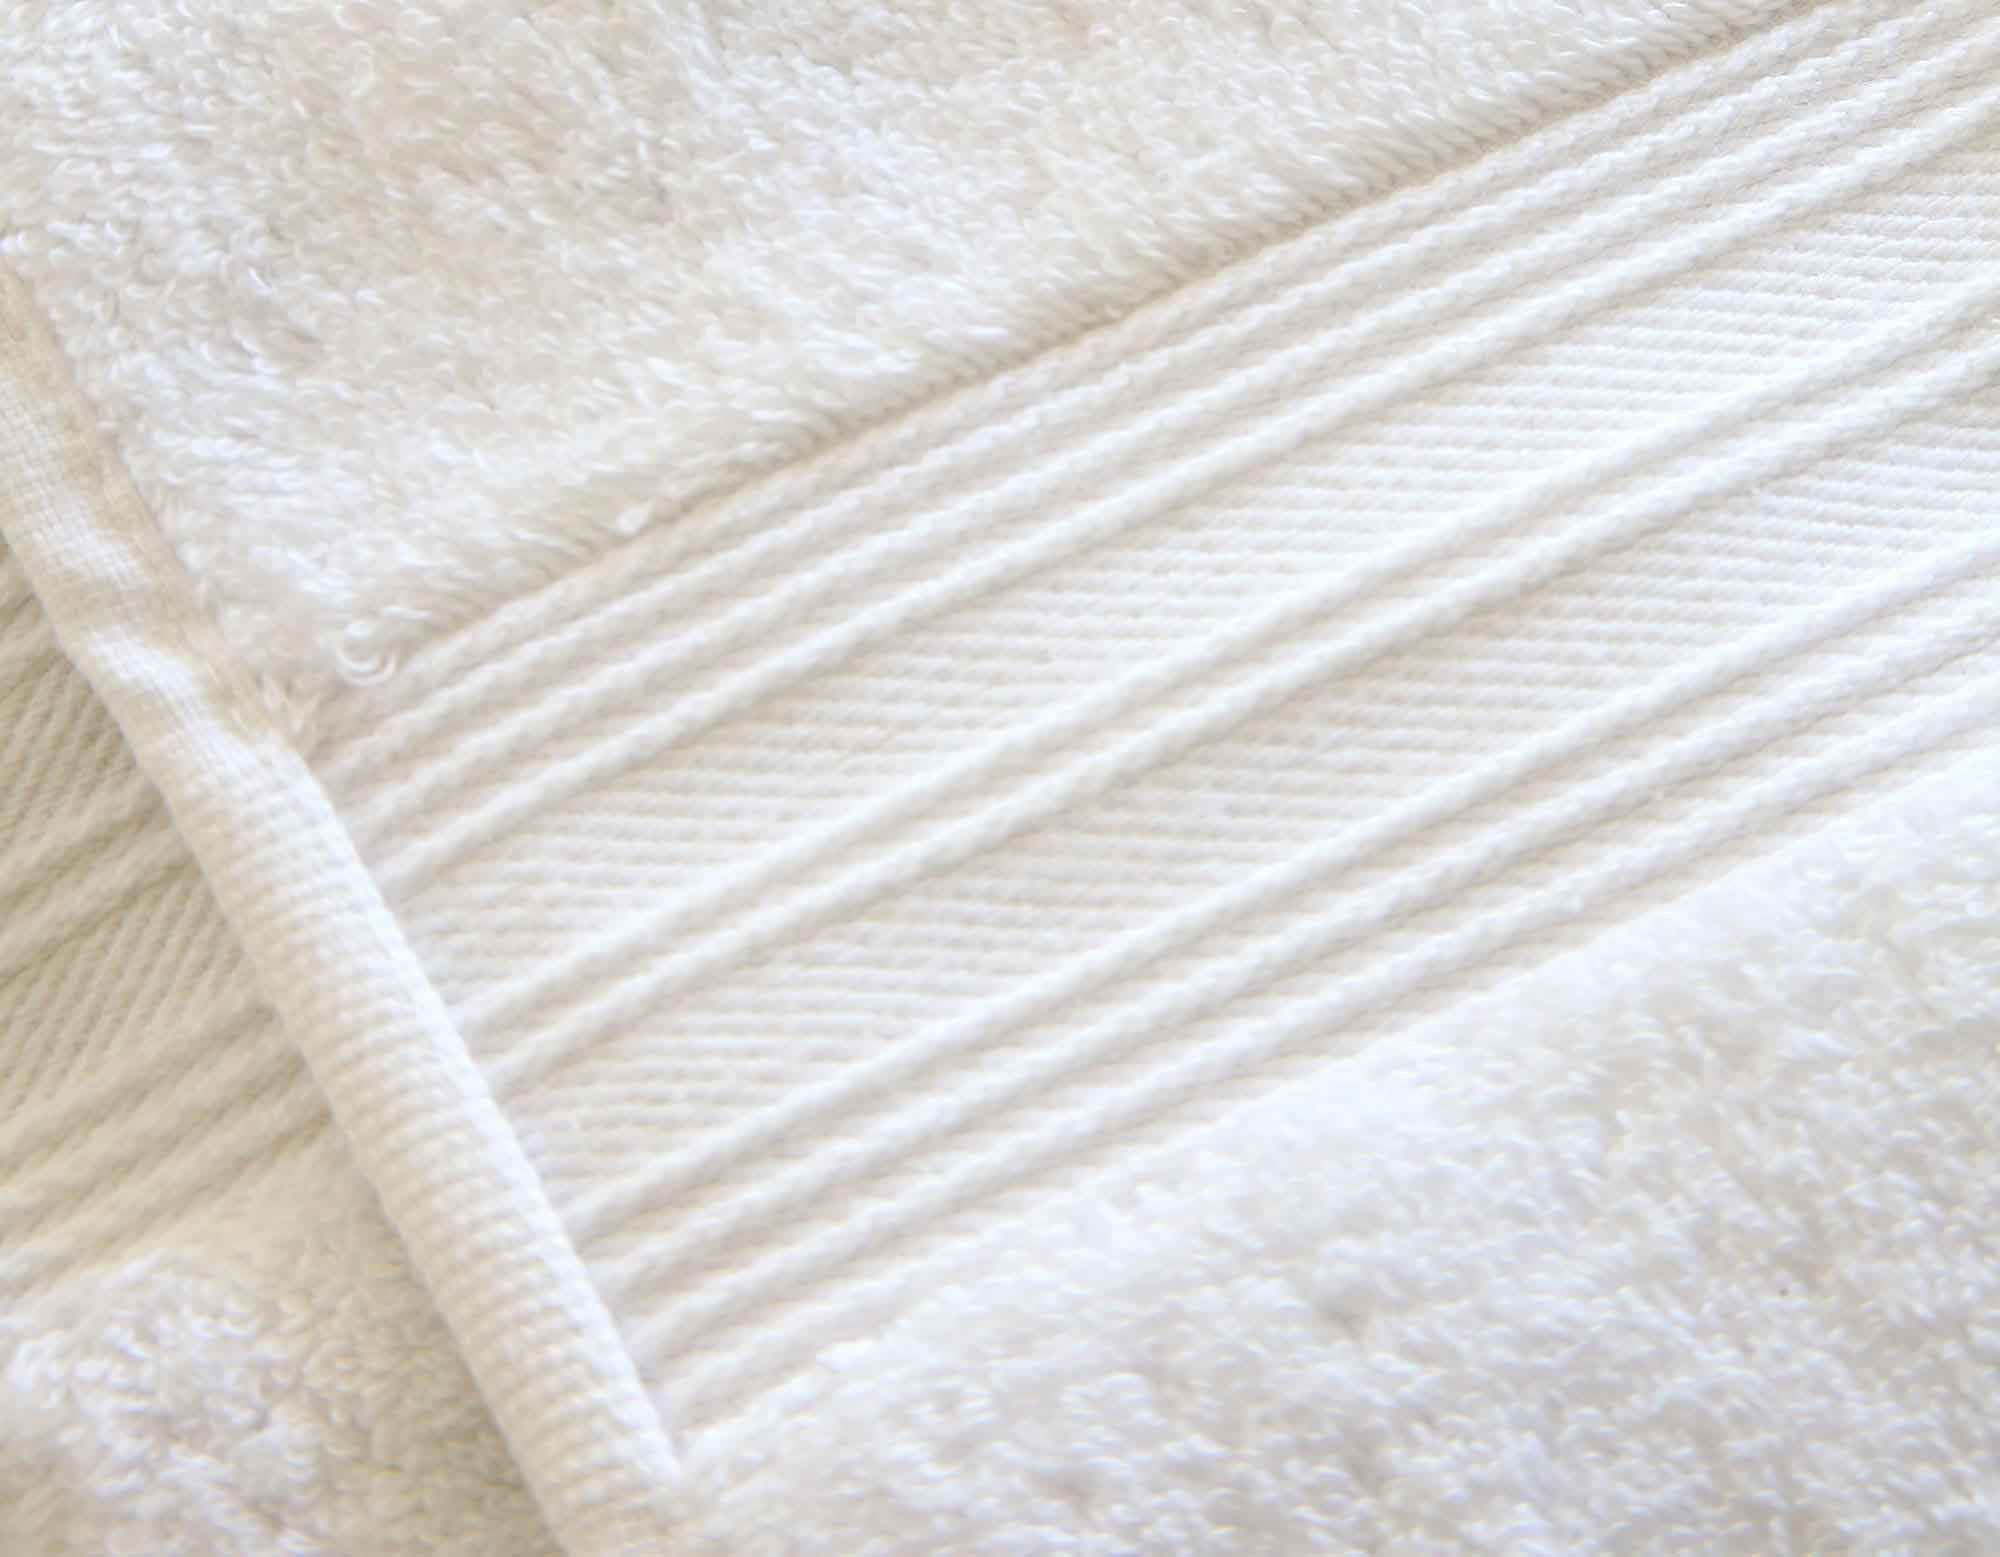 White Egyptian cotton bath sheet detail showing edging and border 